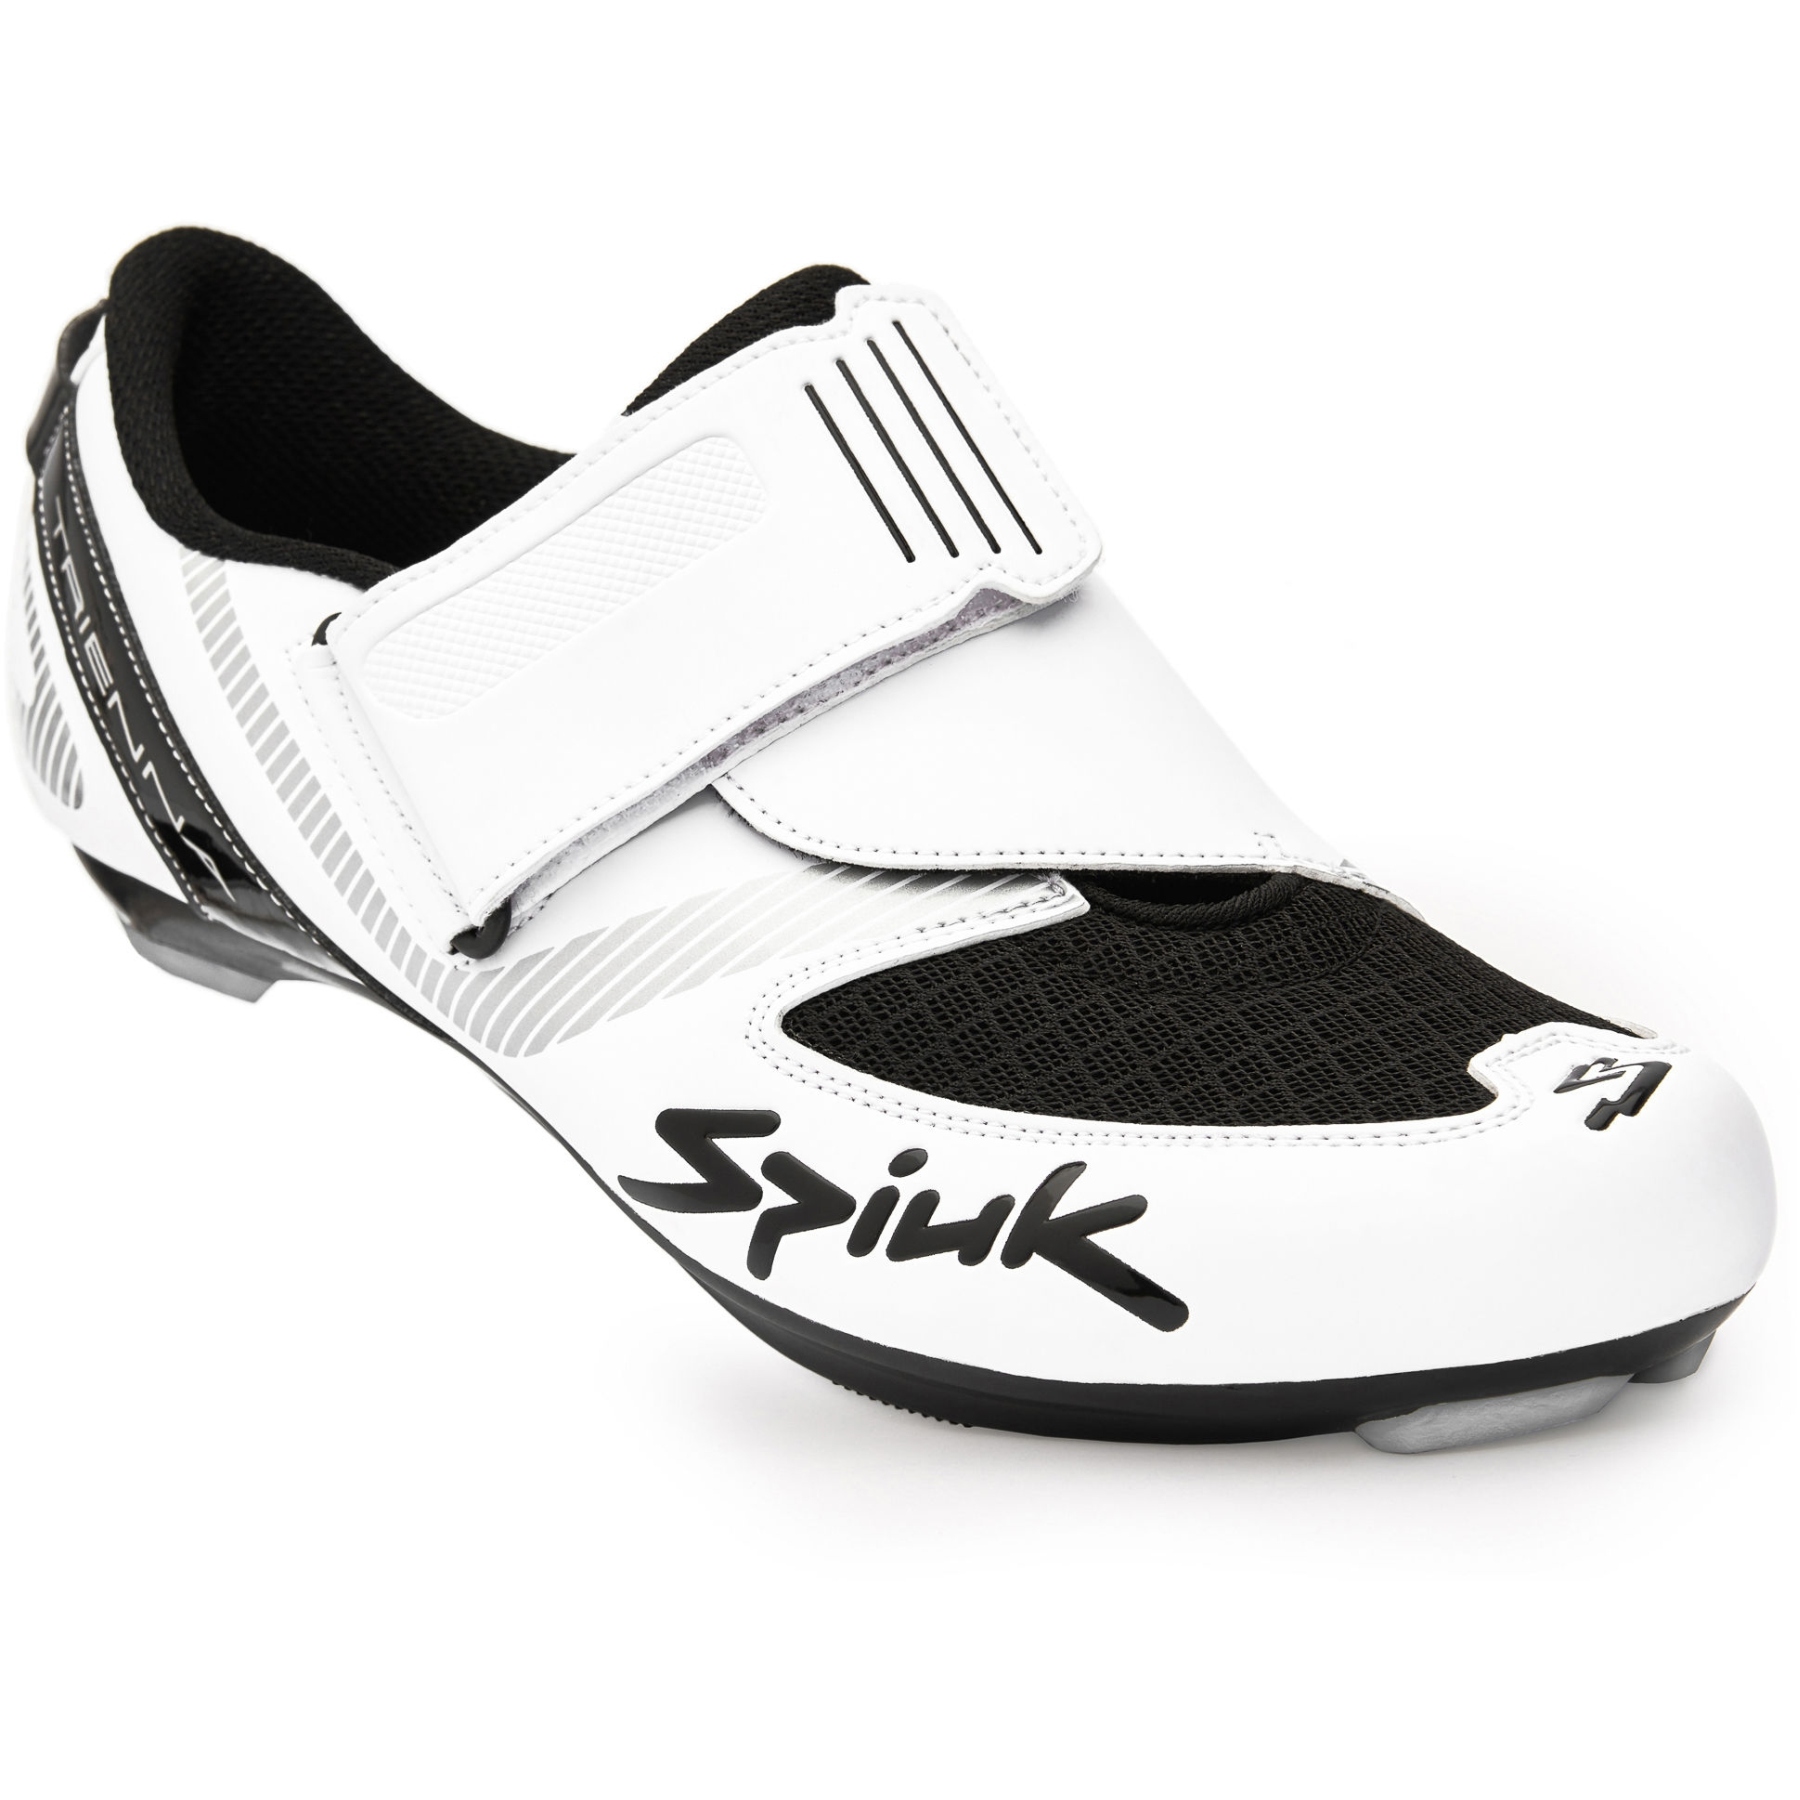 Picture of Spiuk Trienna Triathlon Shoe - white matt